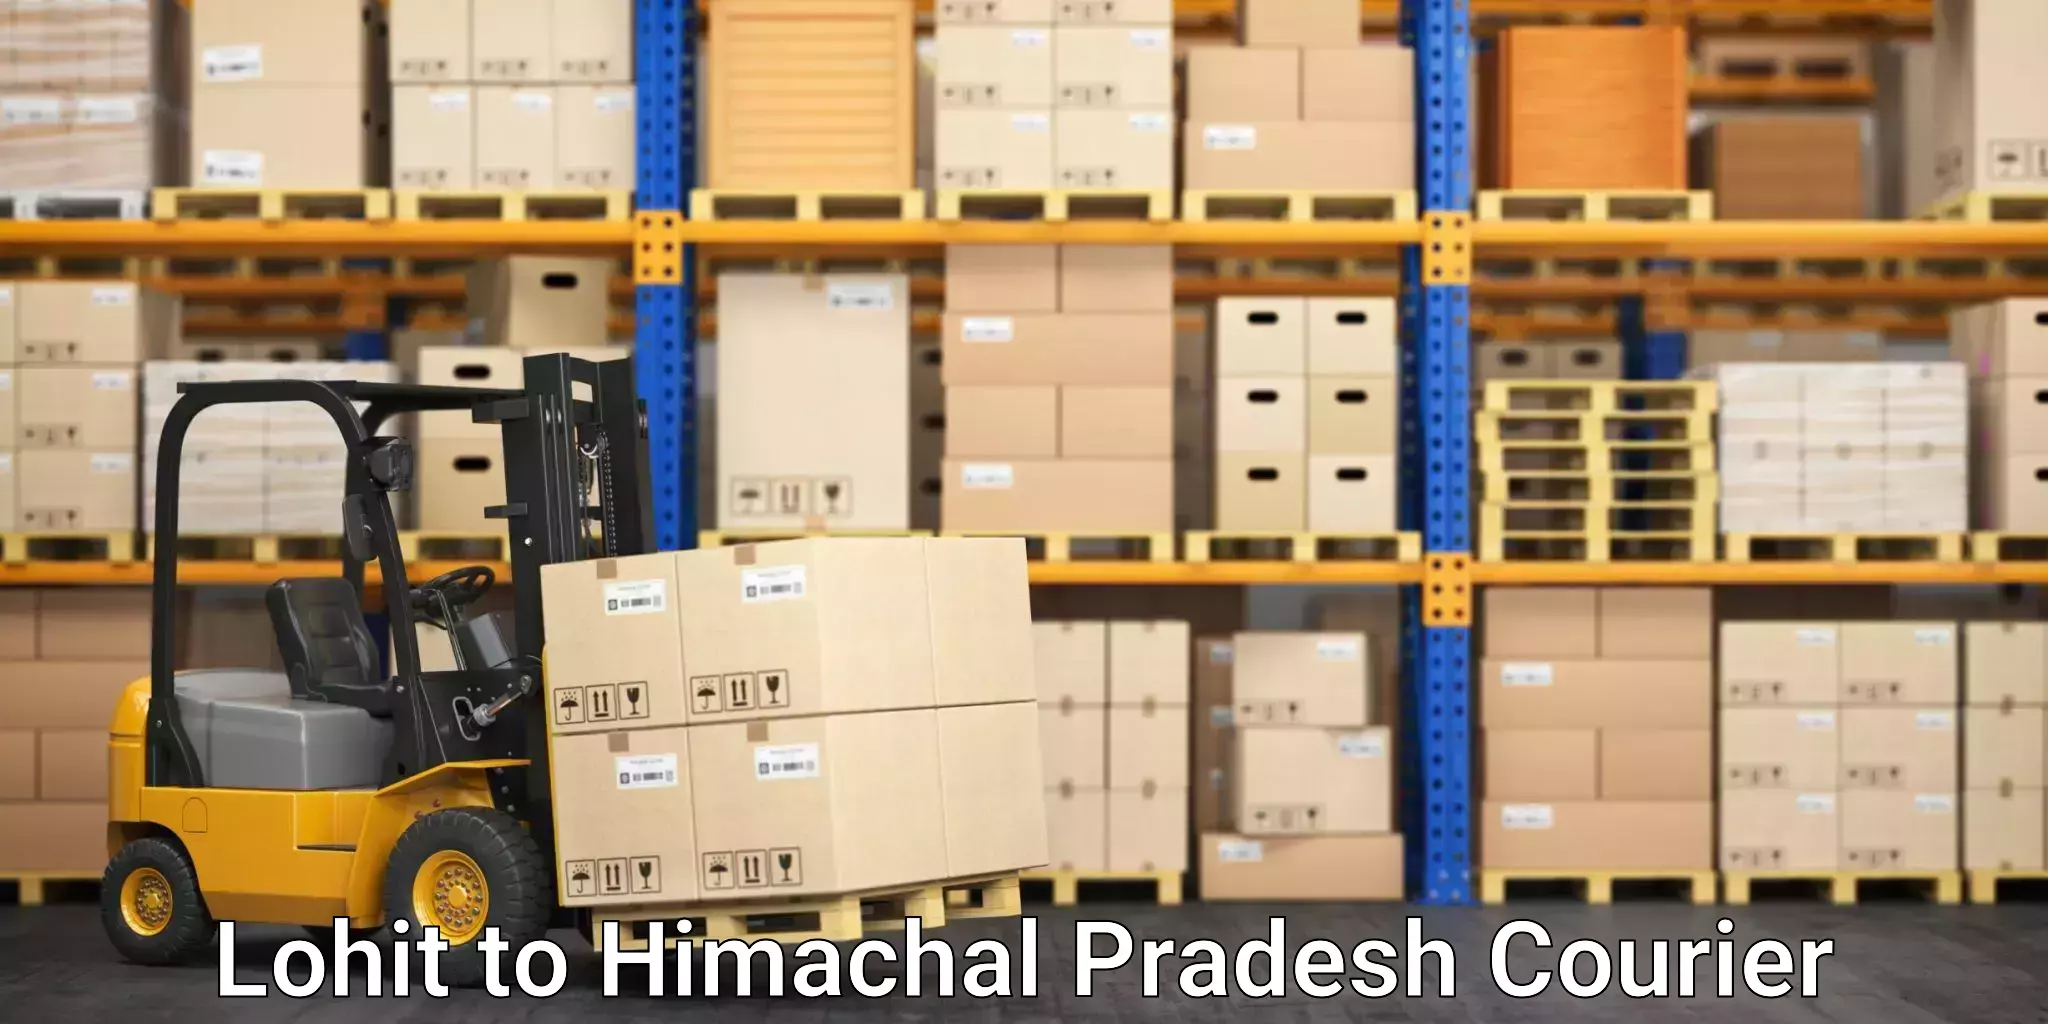 International parcel service Lohit to Himachal Pradesh